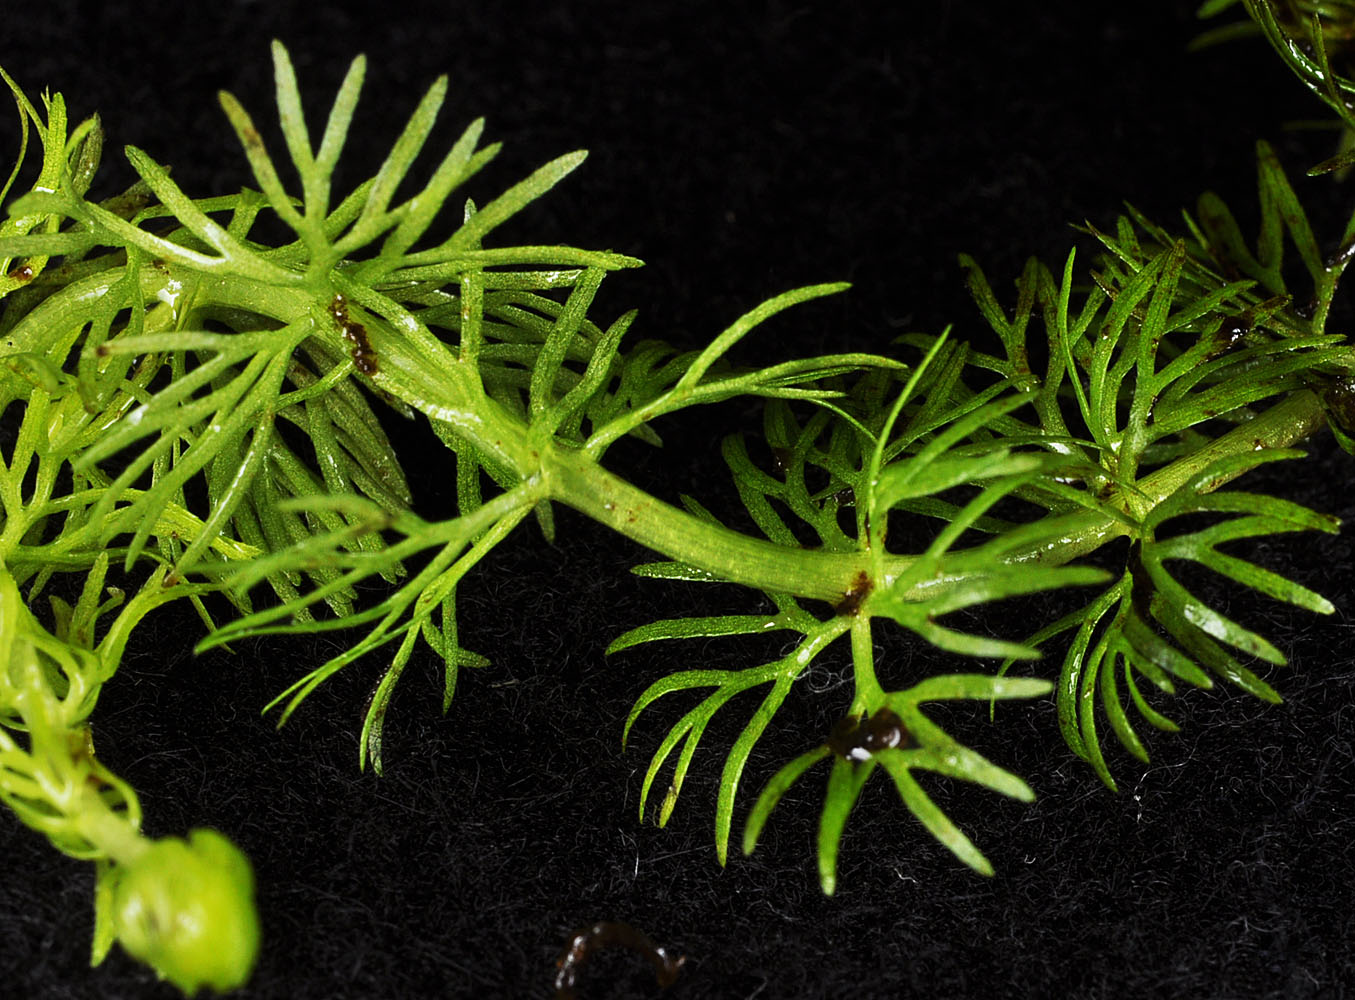 Flora of Eastern Washington Image: Utricularia intermedia